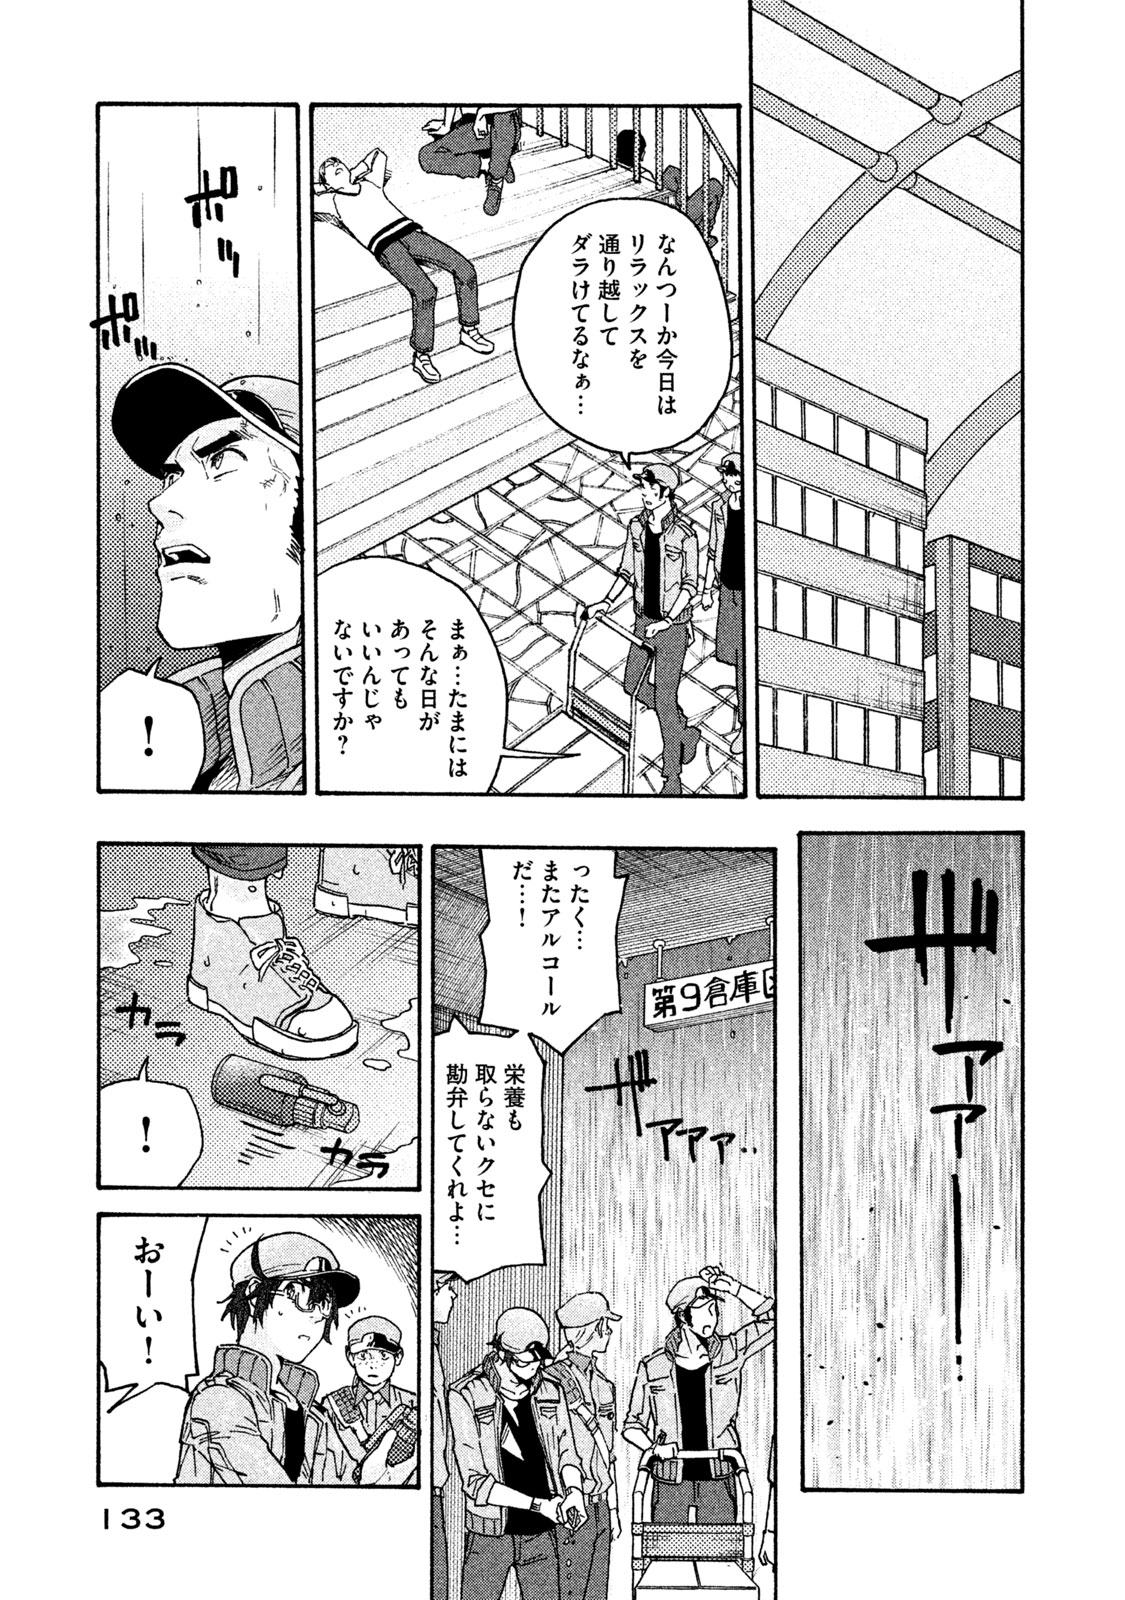 Hataraku Saibou BLACK - Chapter 31 - Page 9